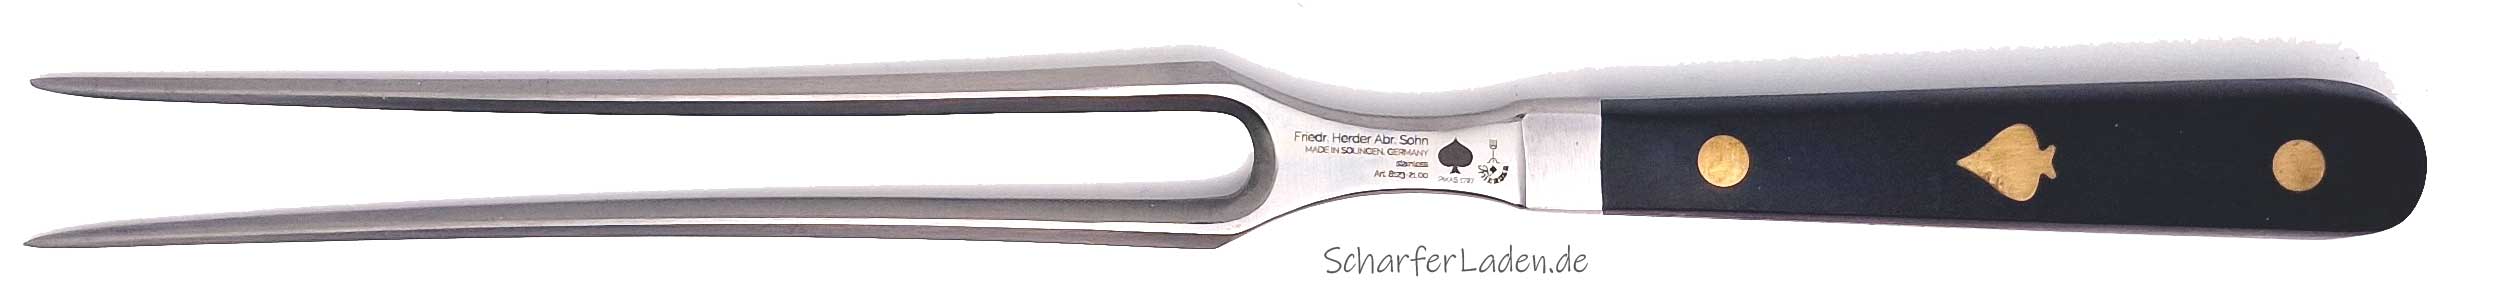 FRIEDRICH HERDER ABR. SOHN - PIKAS Tranchiergabel 20,5 cm